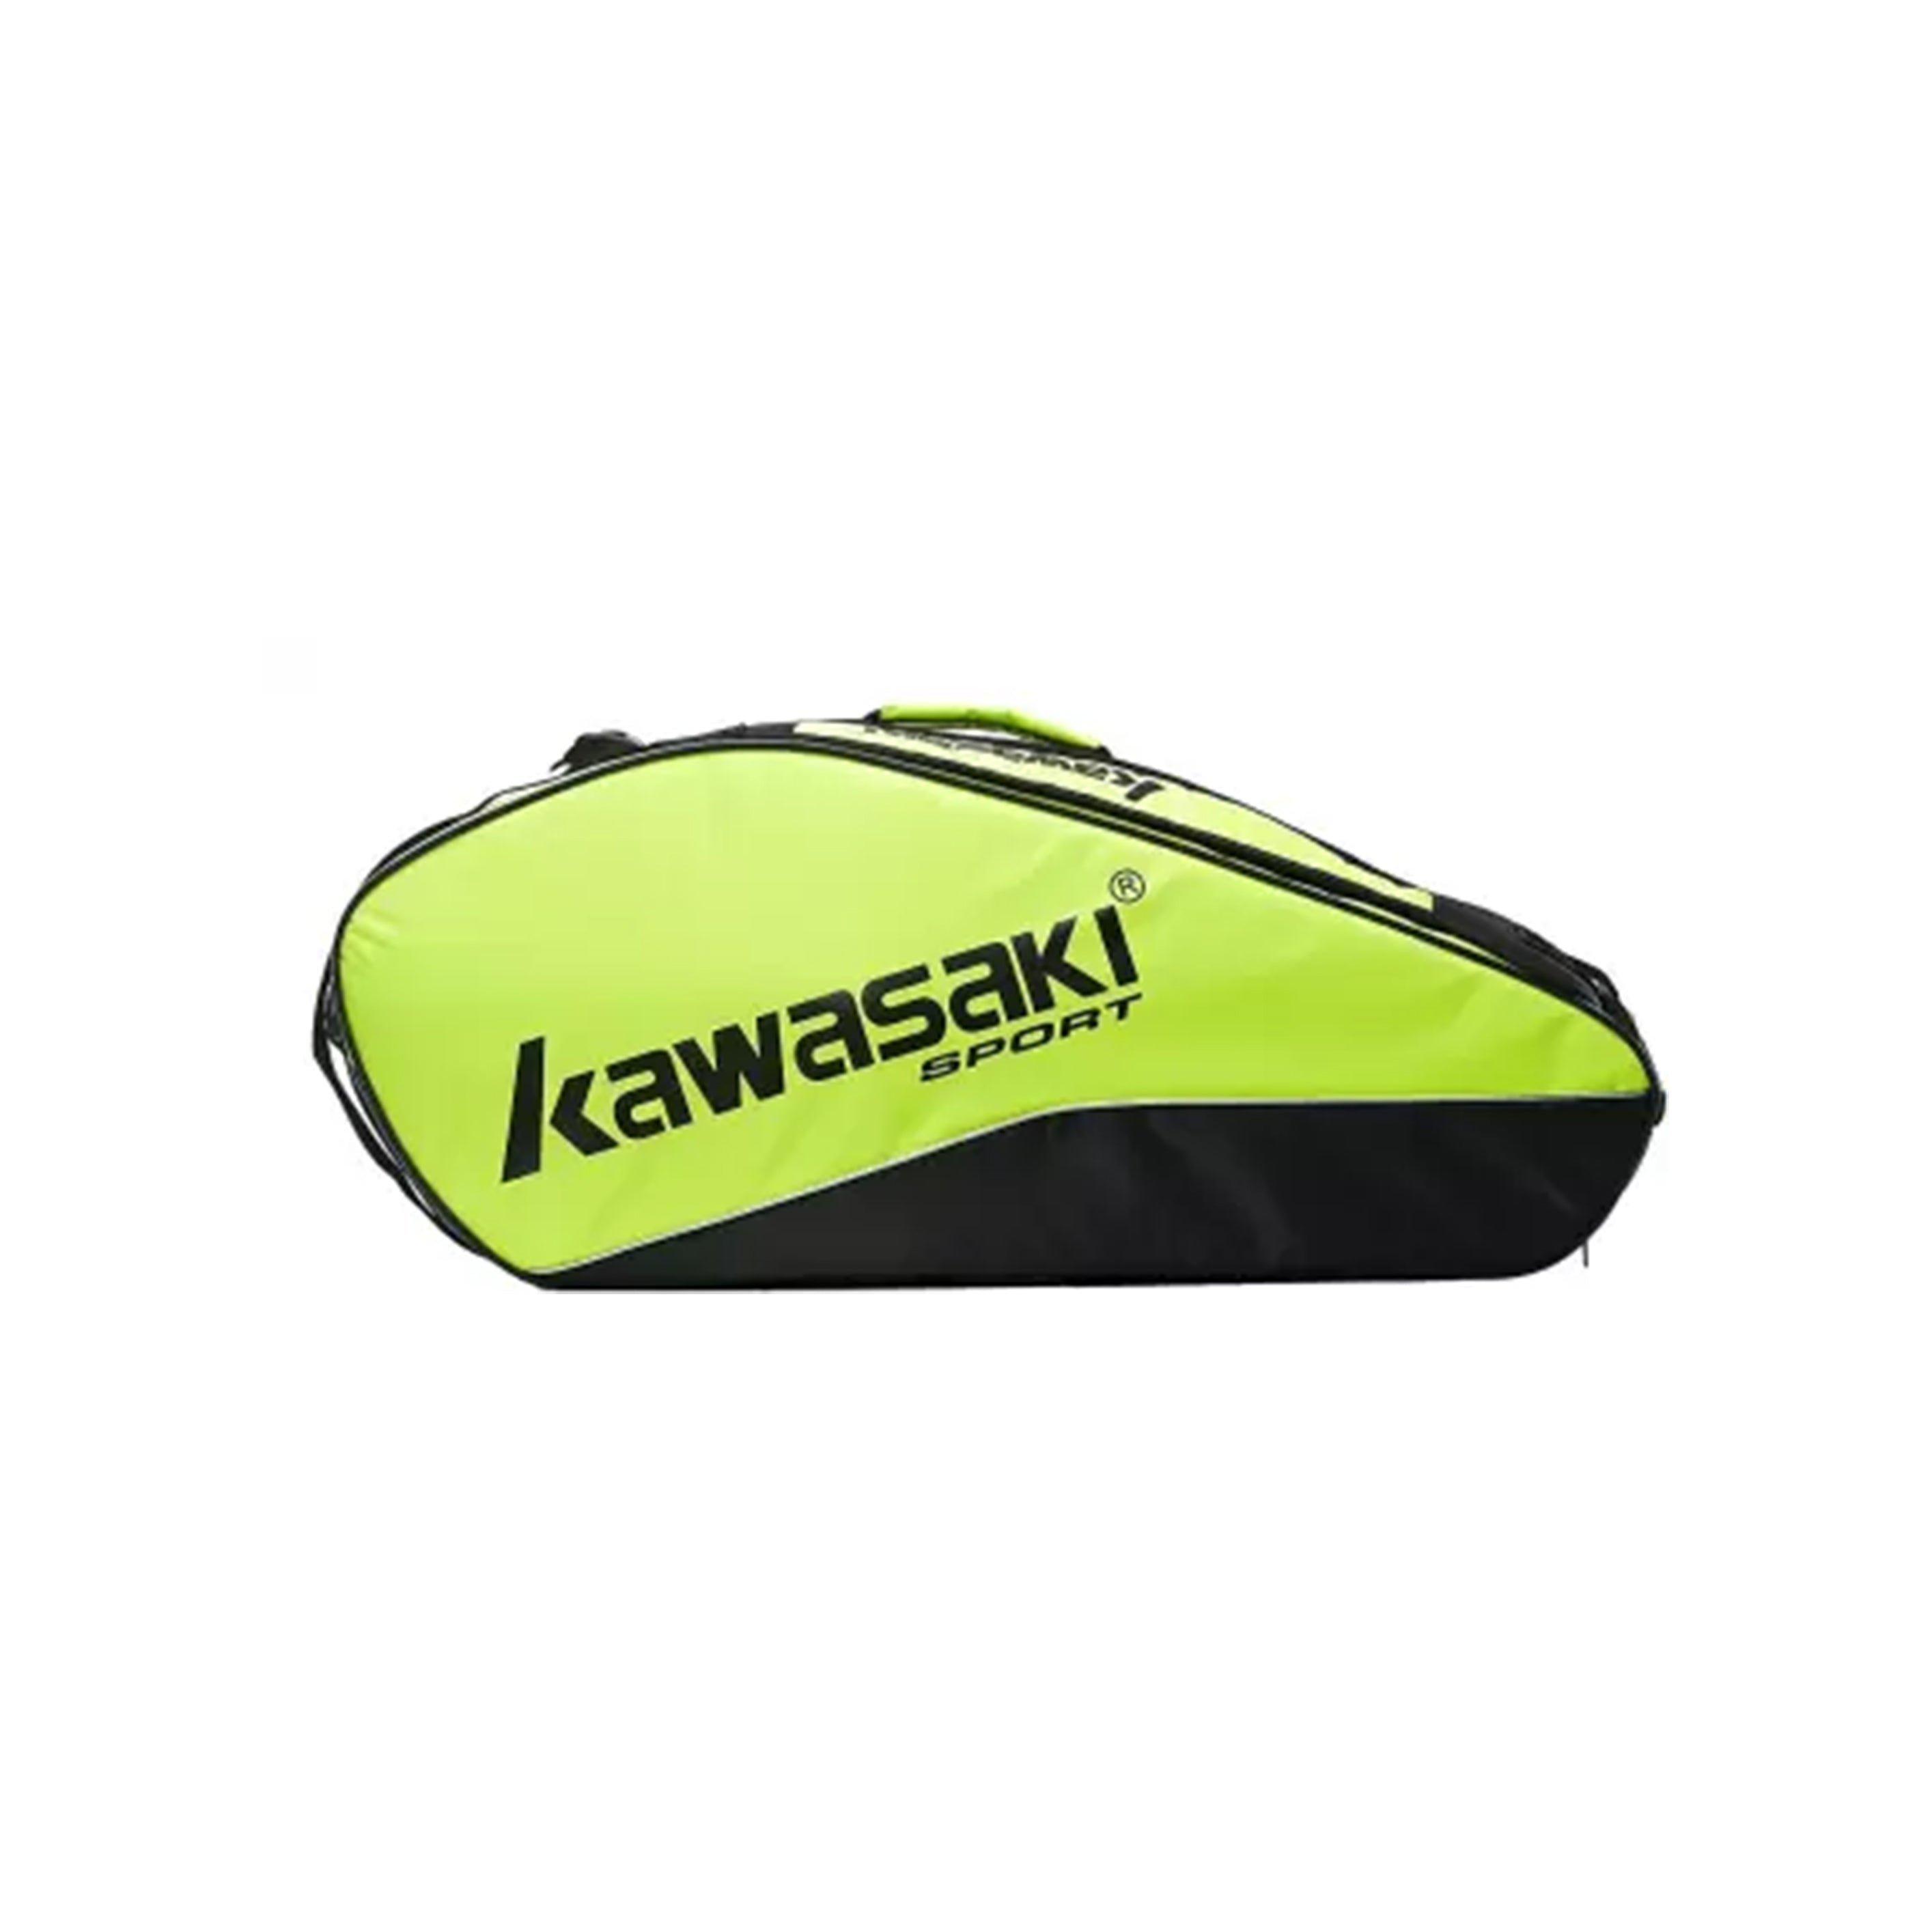 KBB-8665 Racket Bag (Black+Green) no stock